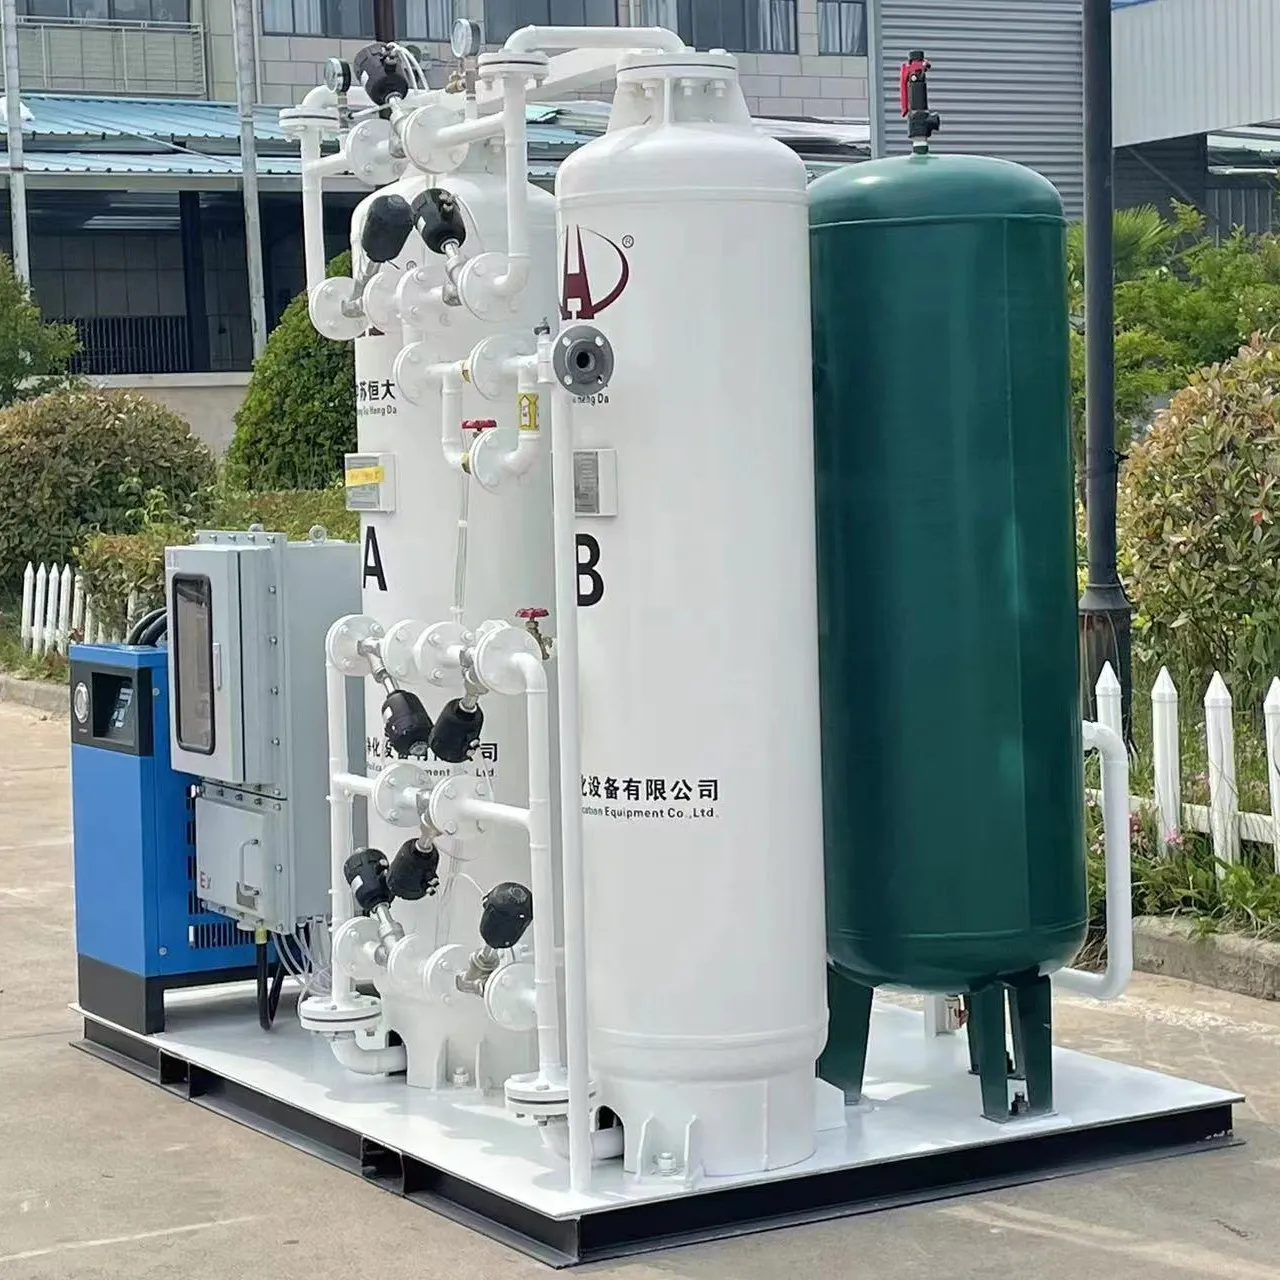 PSA-Sauerstoff generator anlage Sauerstoff generators ystem Sauerstoff produktions geräte